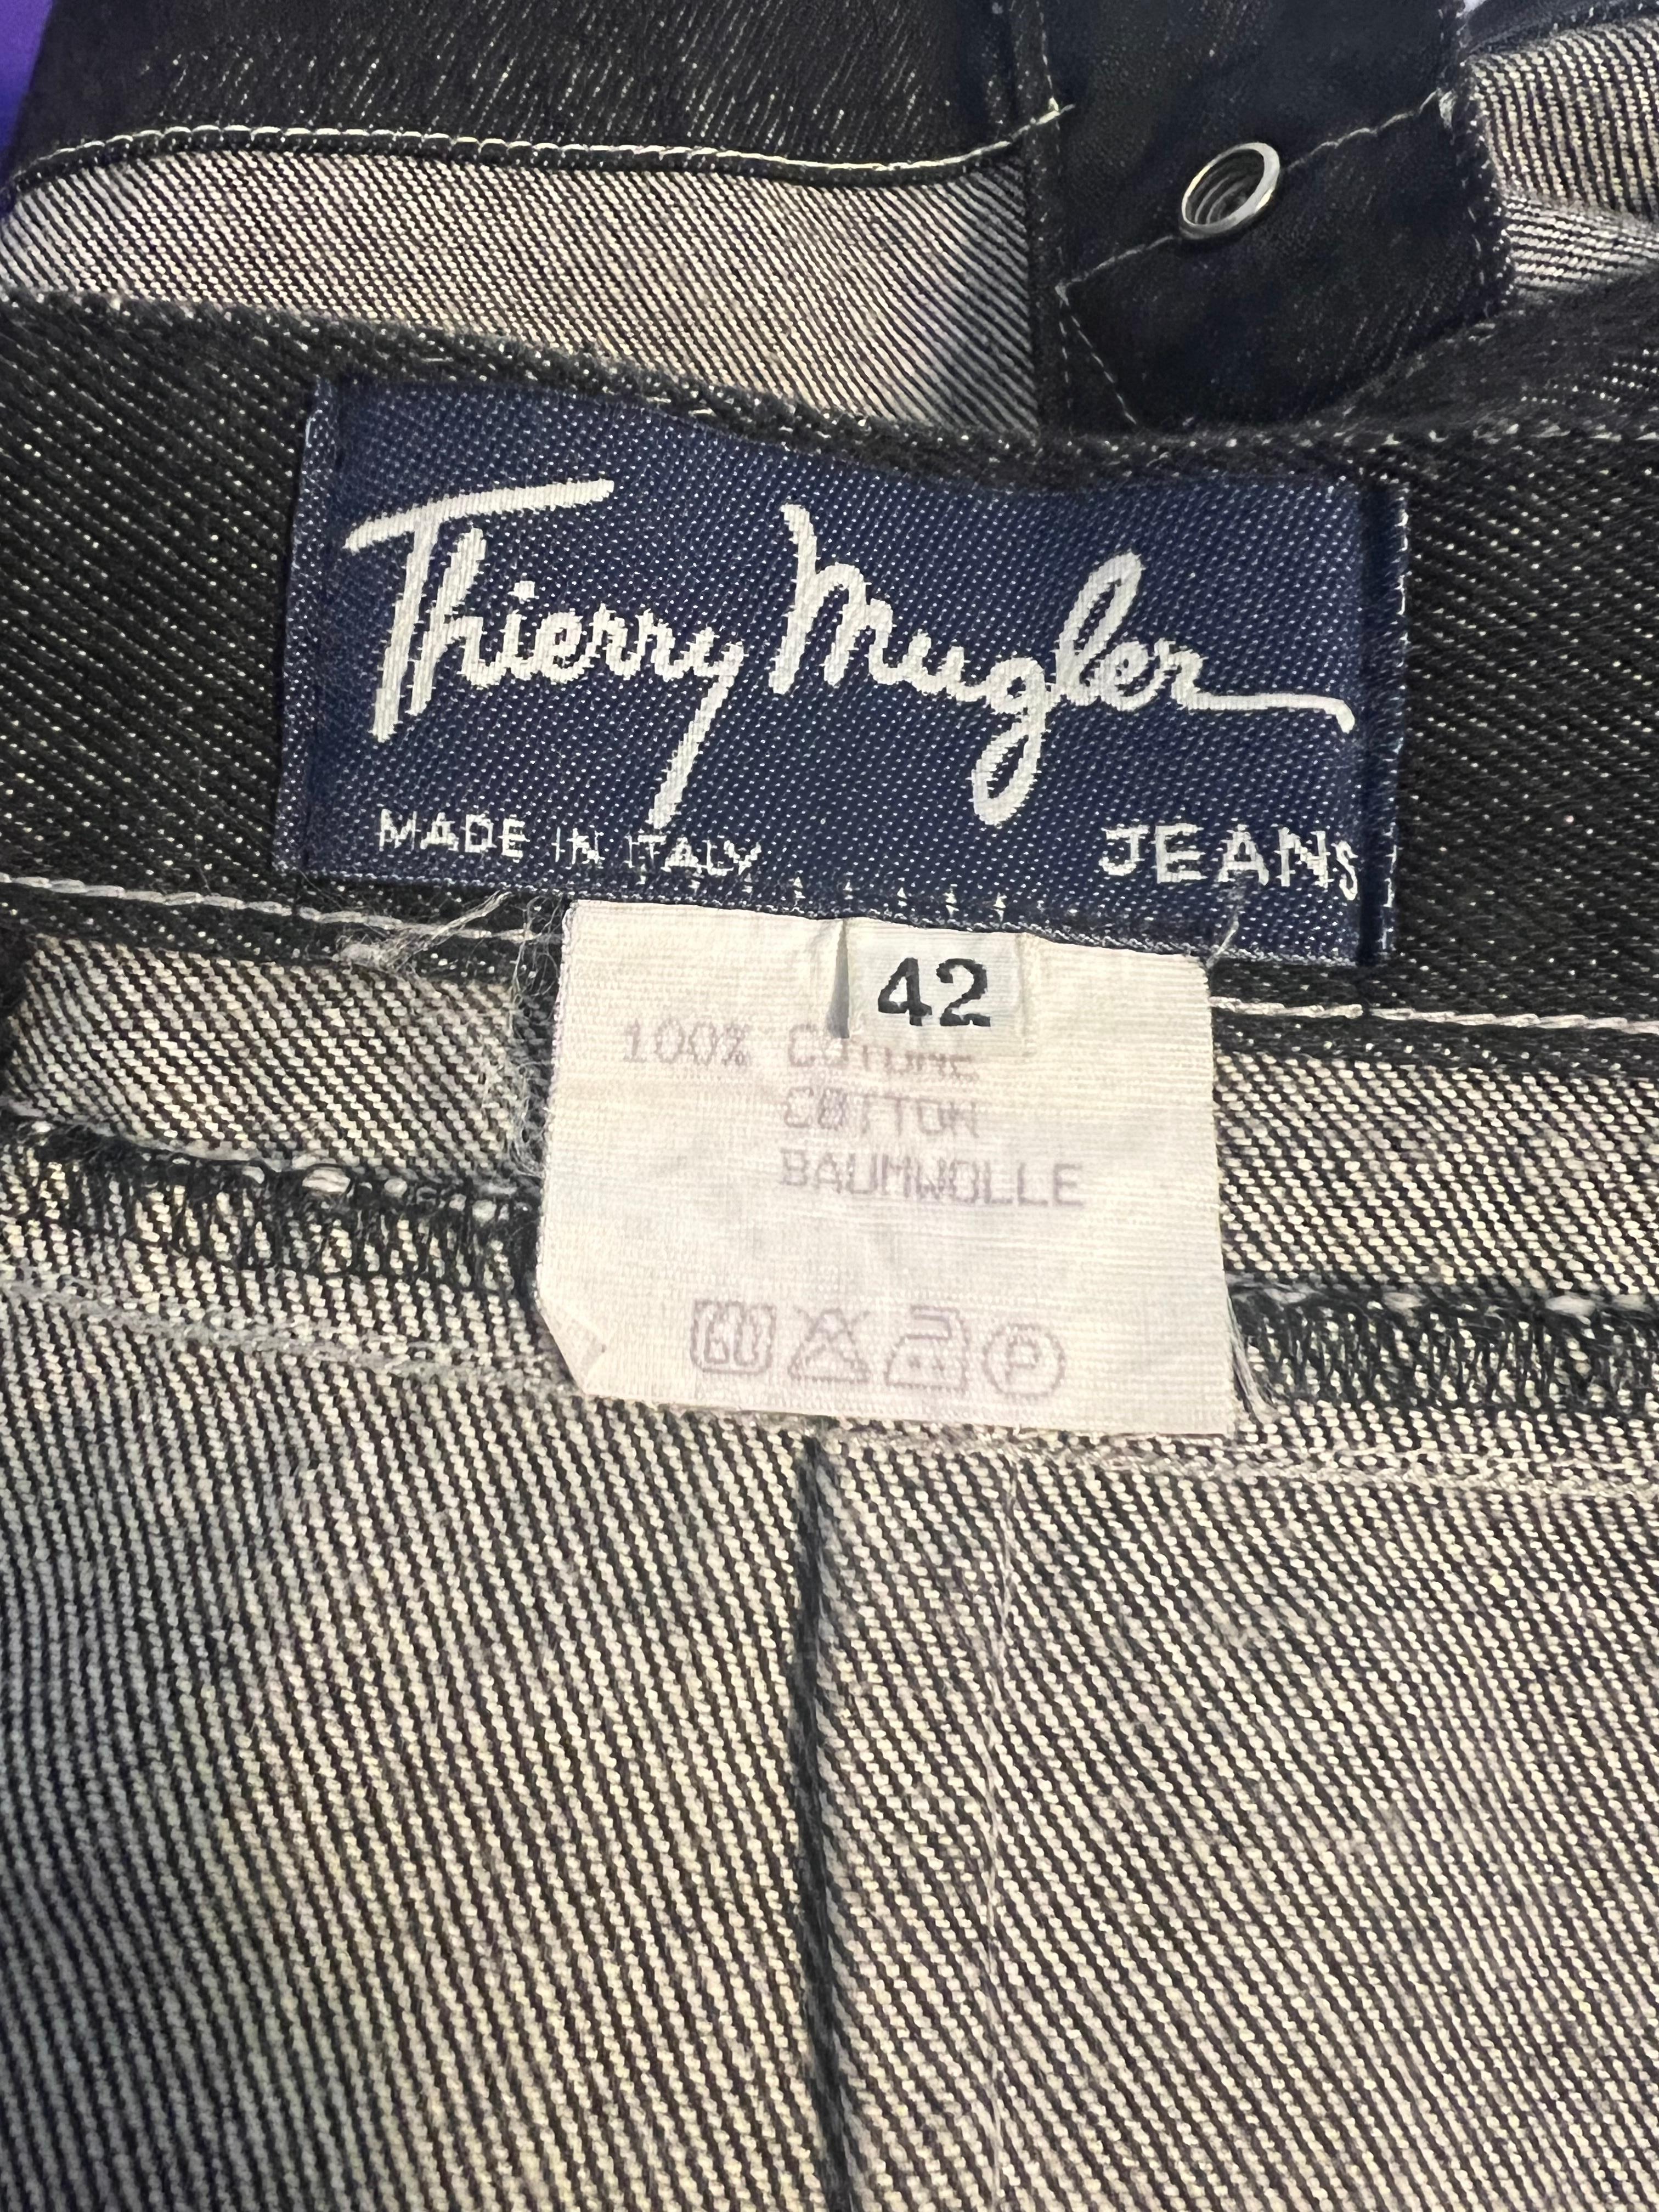 Black Thierry Mugler Jeans Denim Midi Skirt, Size 42 For Sale